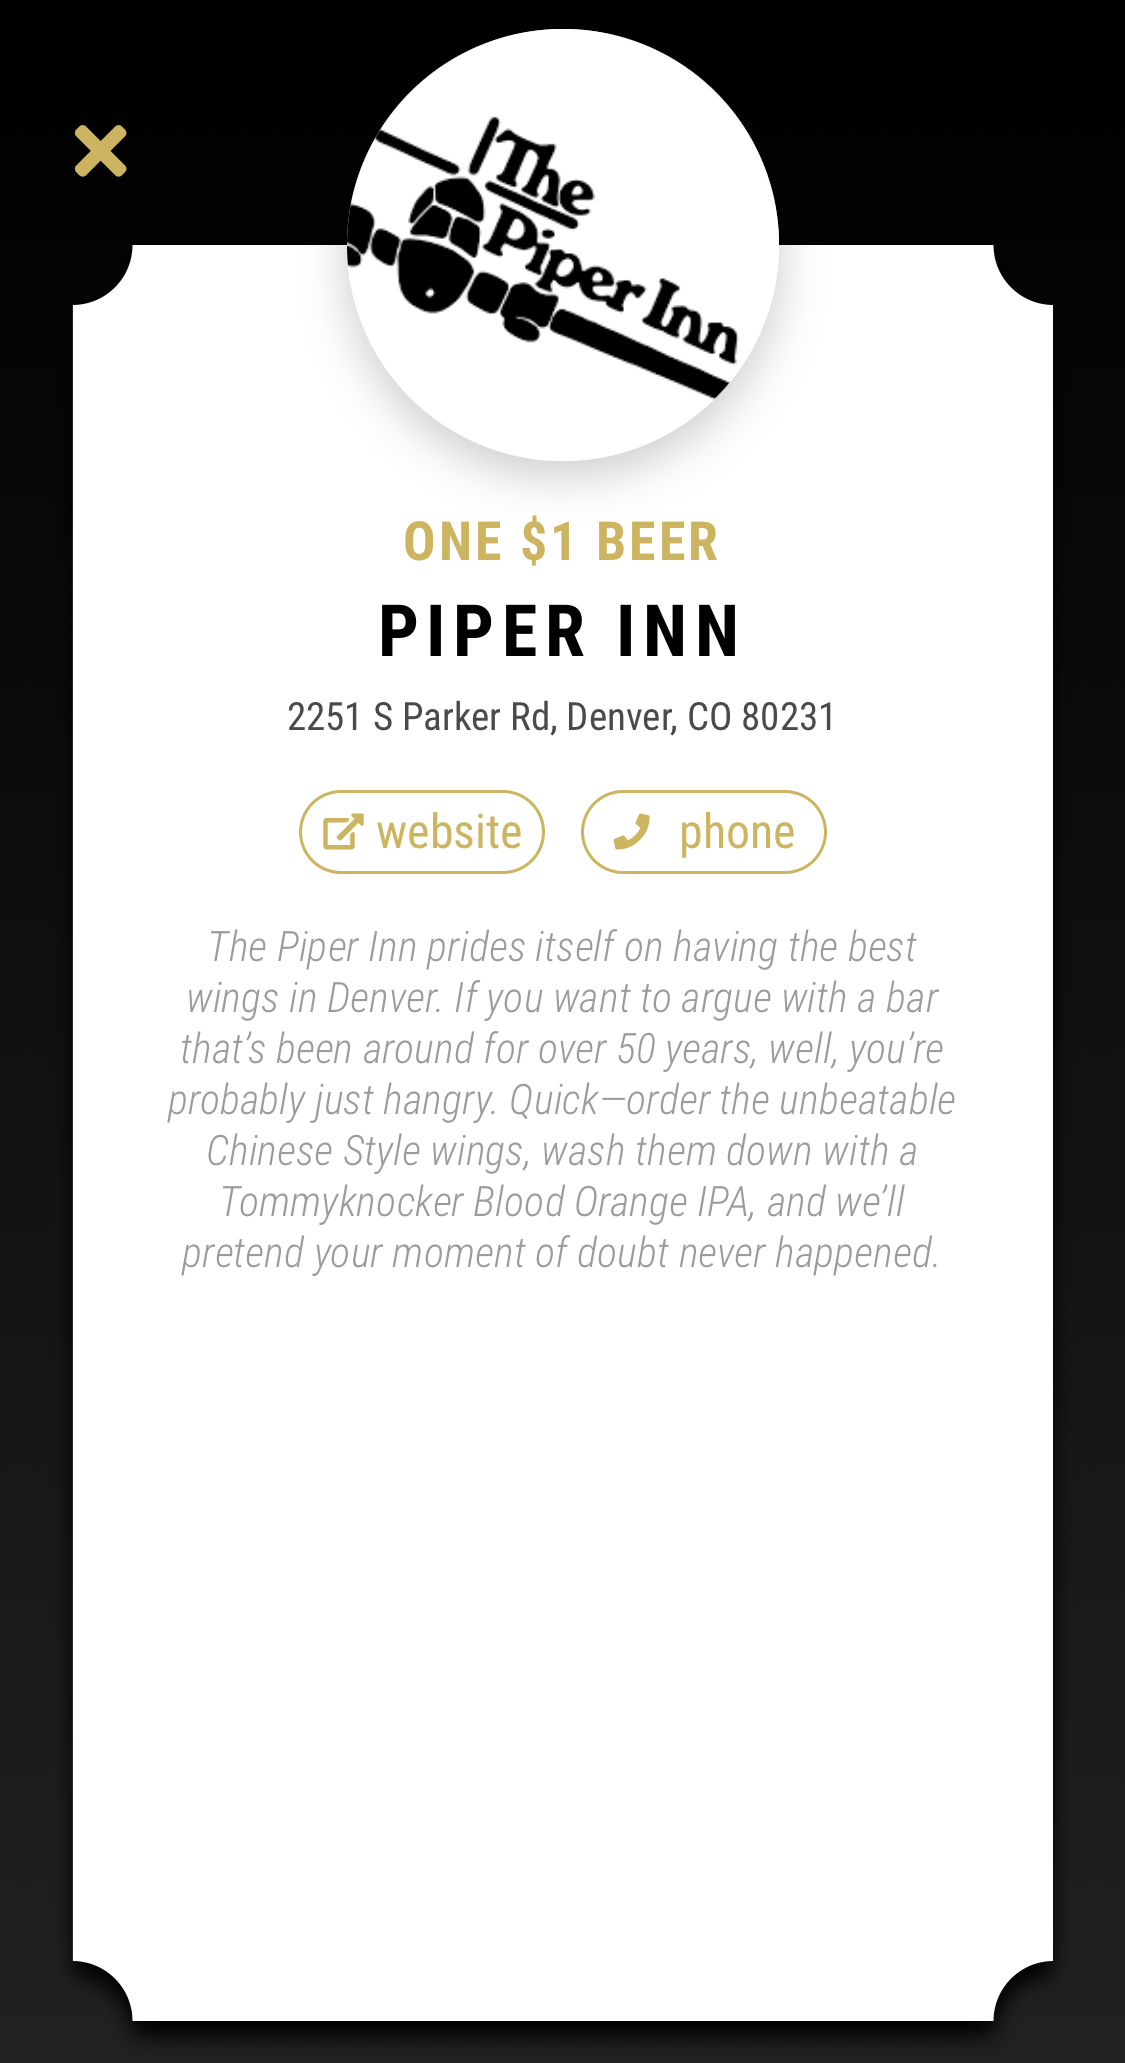 Piper Inn blurb.PNG